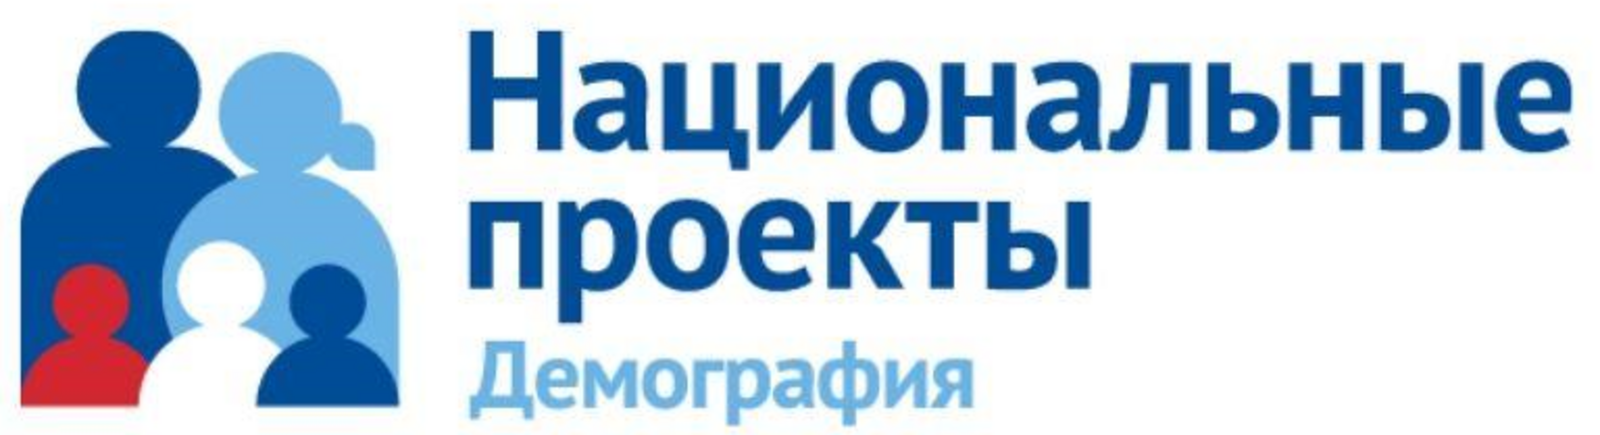 1600 одиноких пенсионеров Башкортостана получили «КОРЗИНУ ДОБРОТЫ»